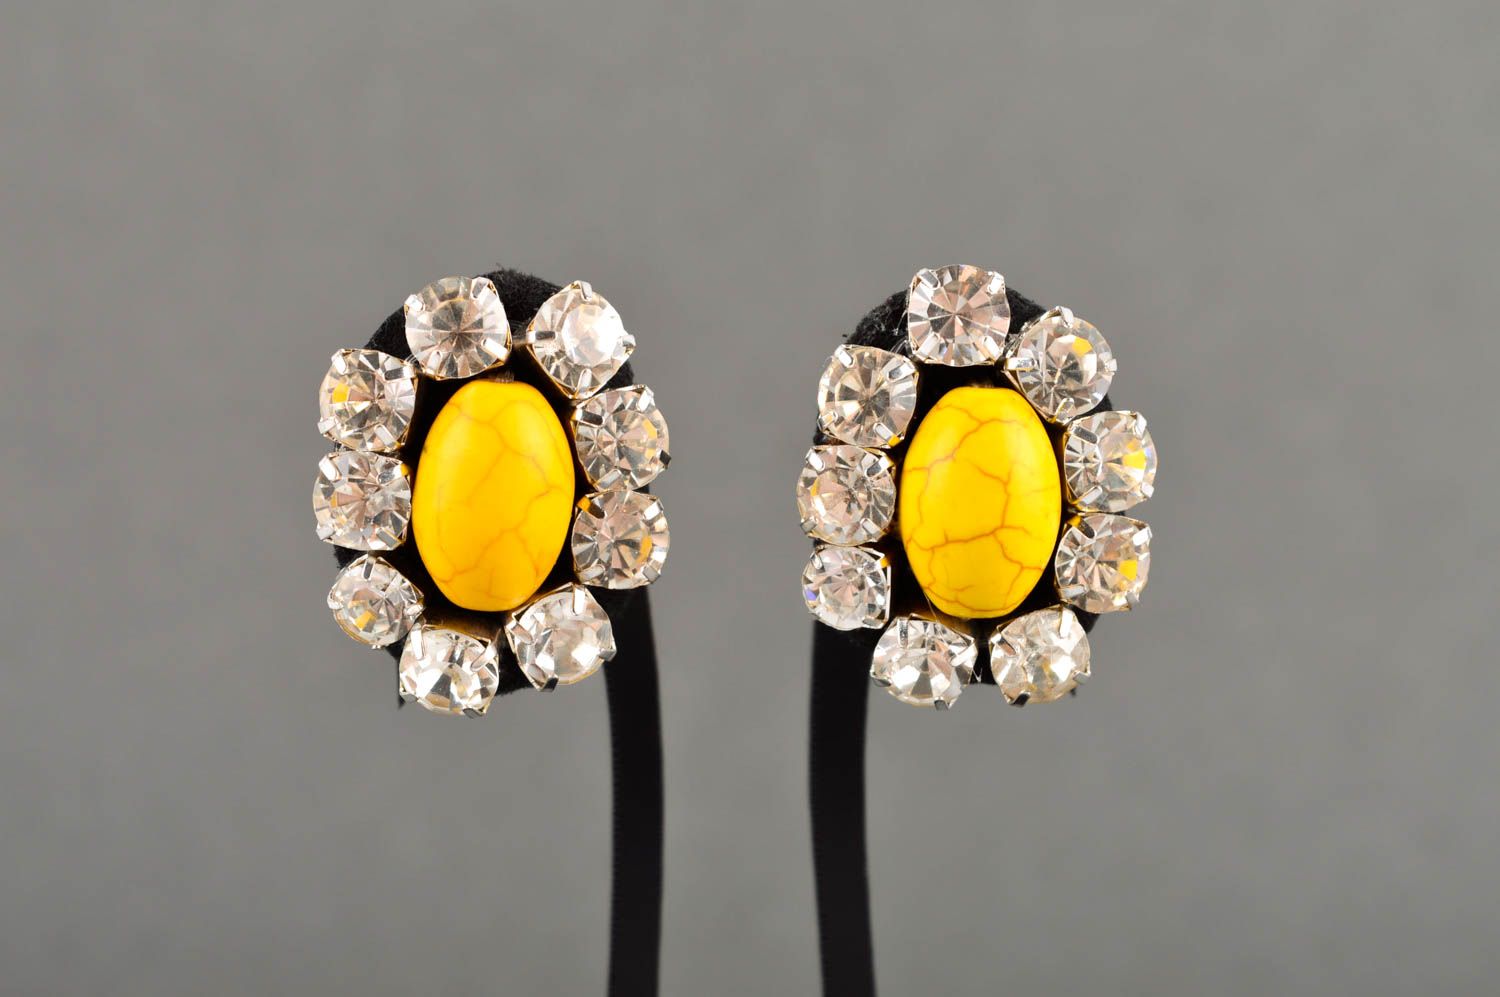 Handmade earrings lemon leather earrings unique jewelry accessories for girls photo 1